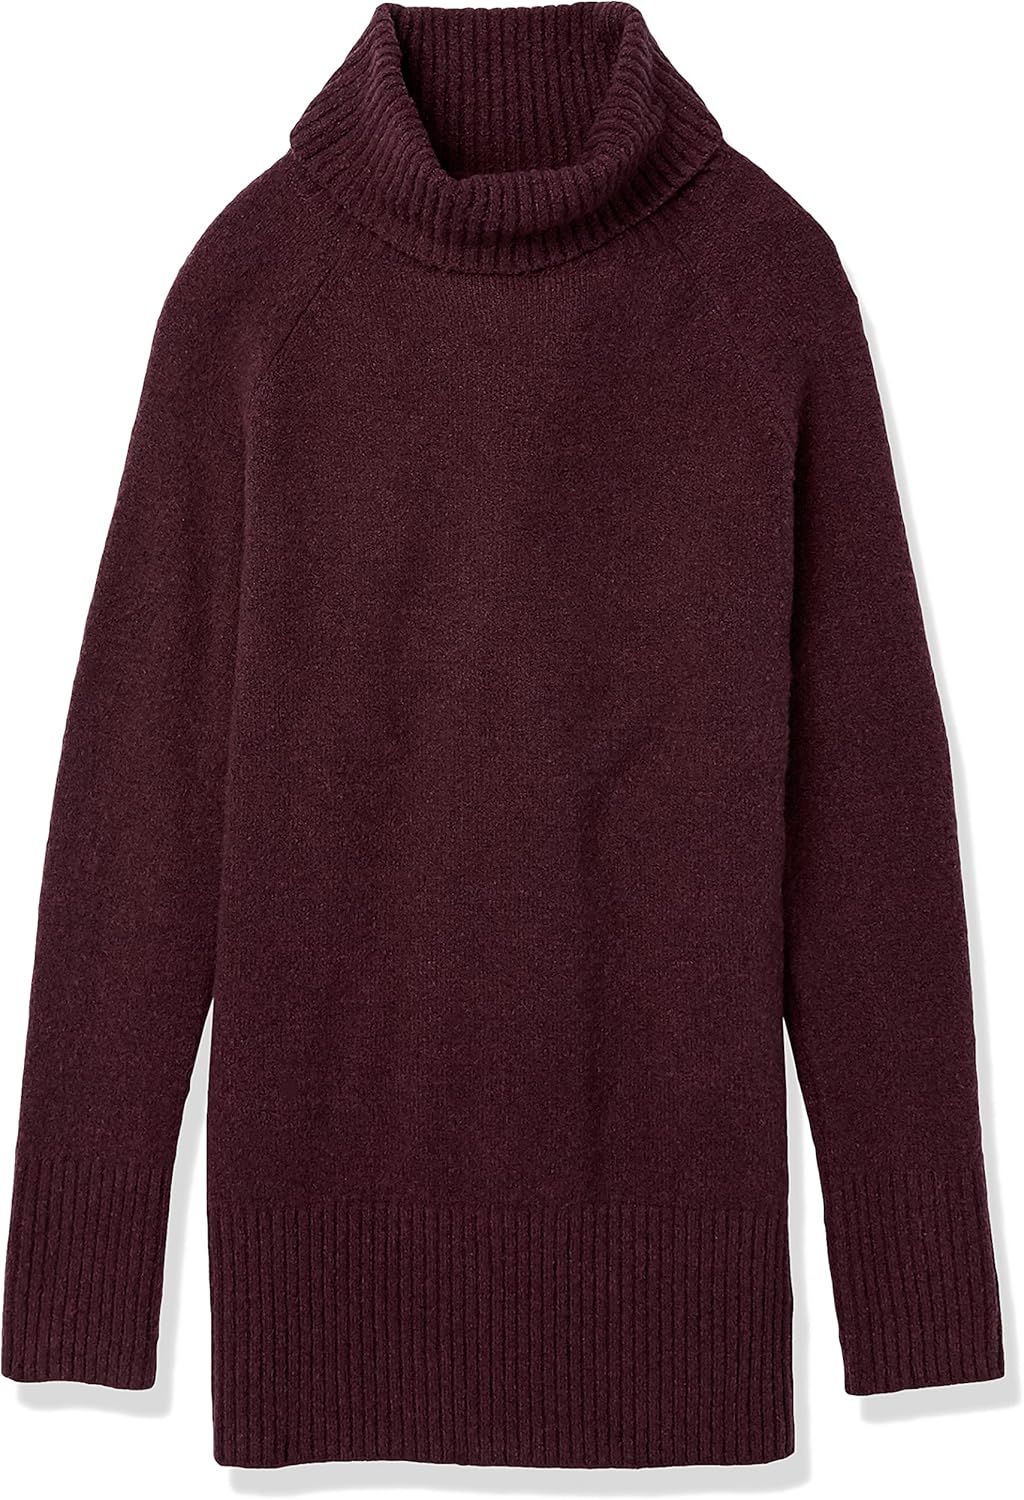 Goodthreads Women's Boucle Turtleneck Sweater | Amazon (US)